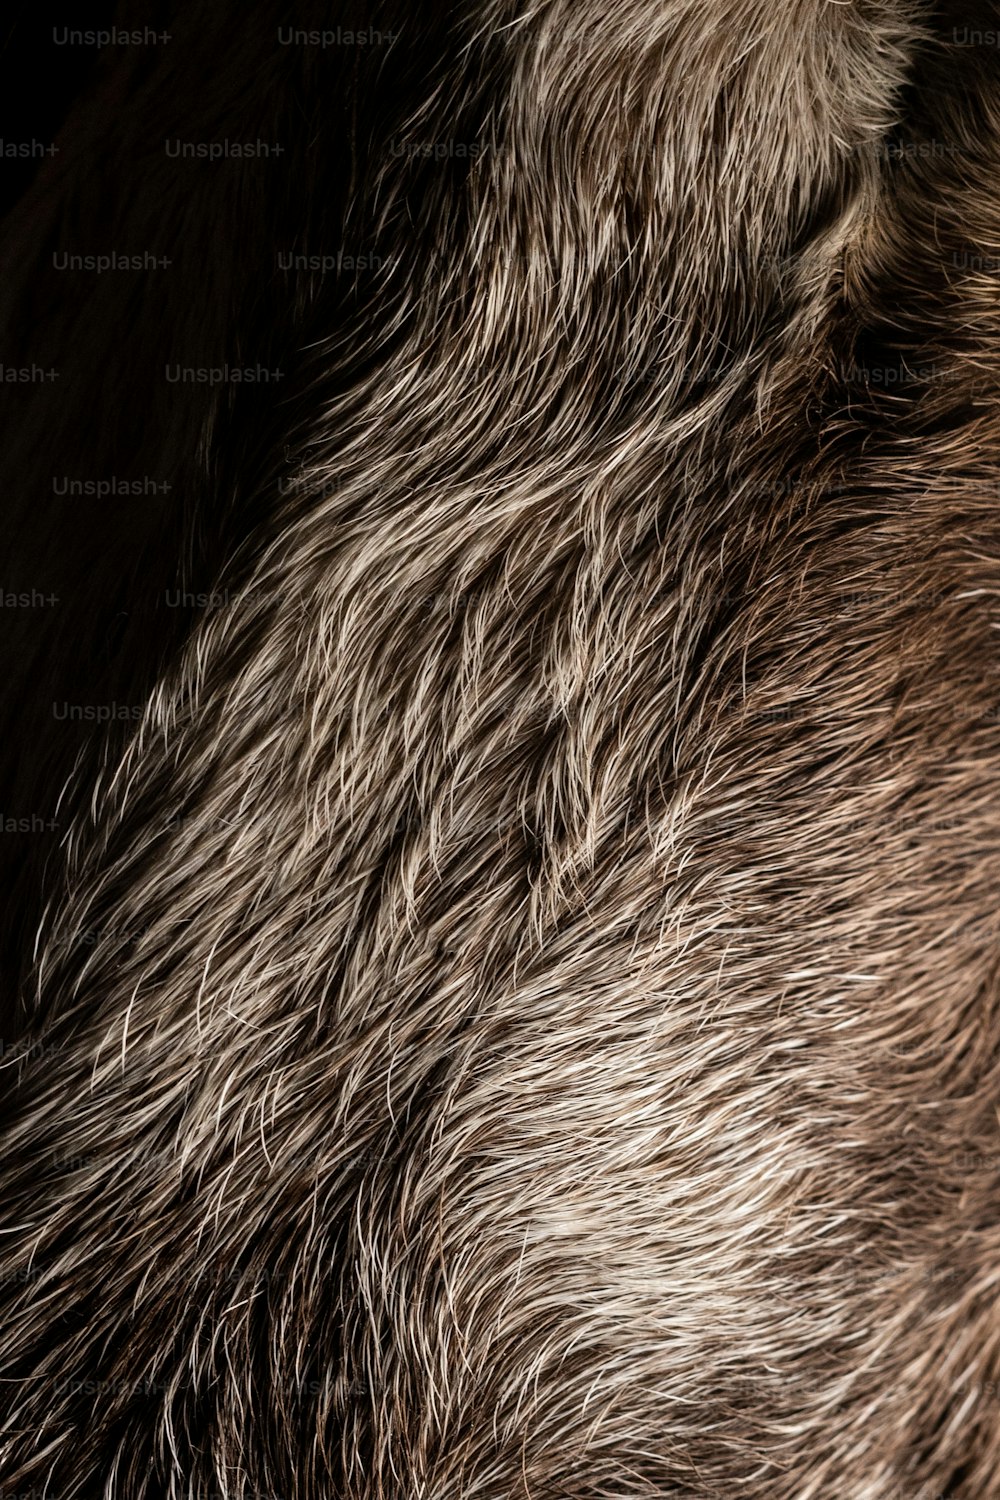 a close up of a furry animal's fur